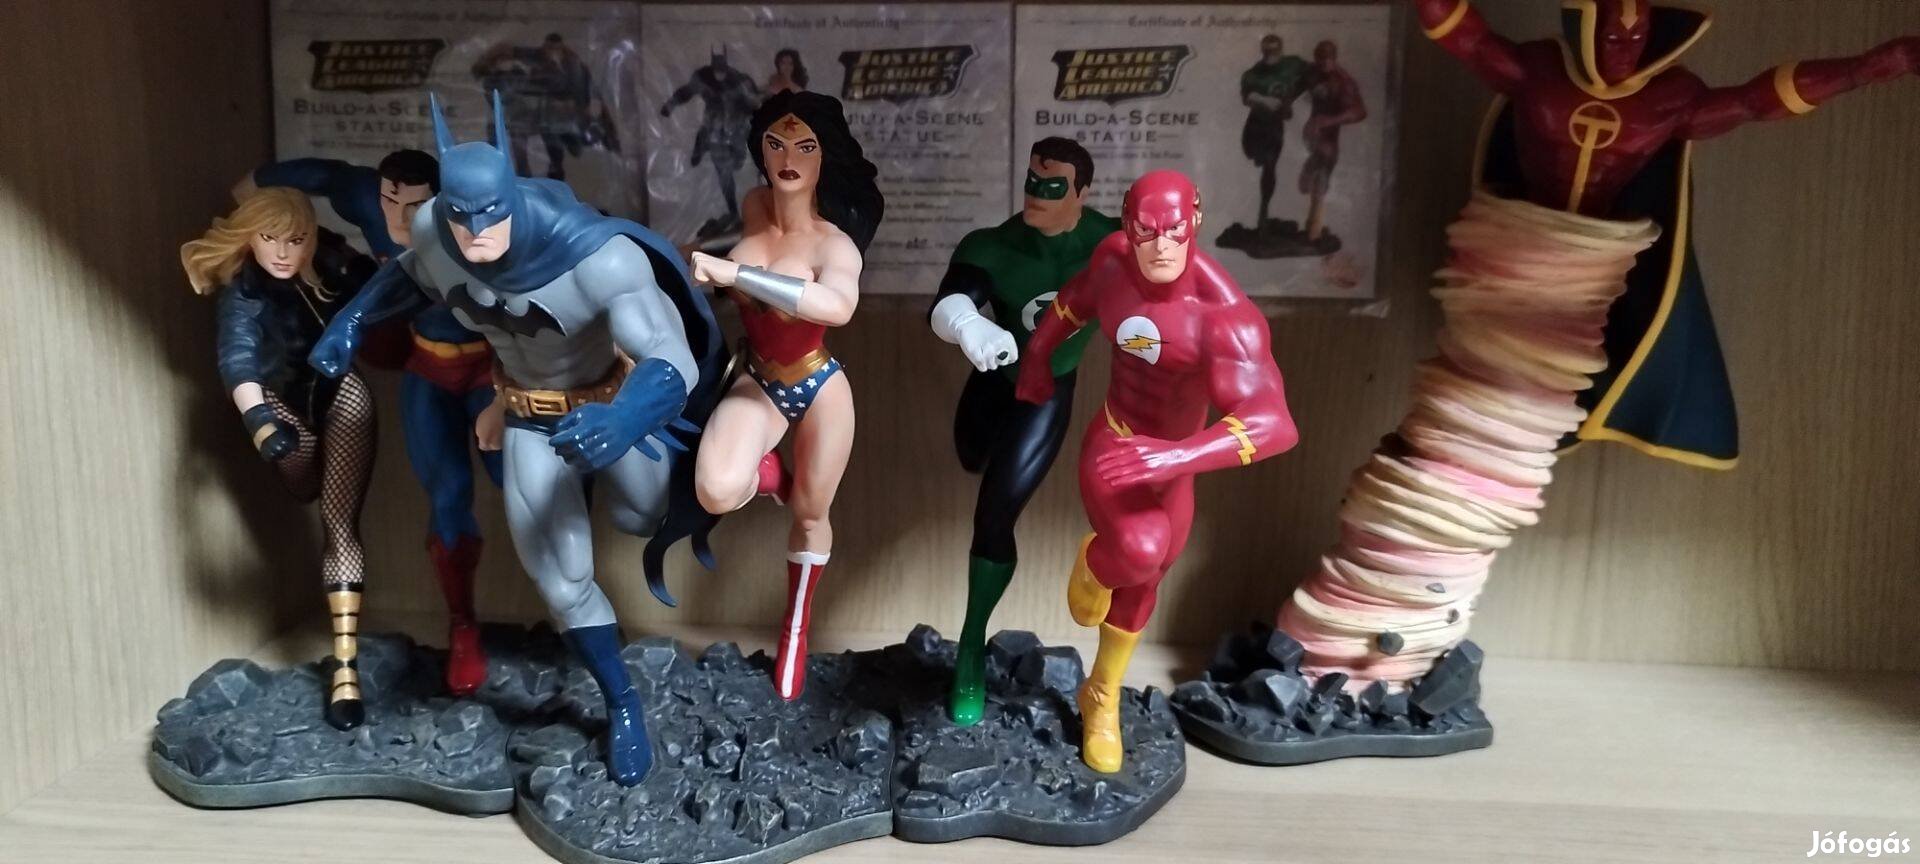 DC Direkt: Justice League of America Build a Scene Diorama